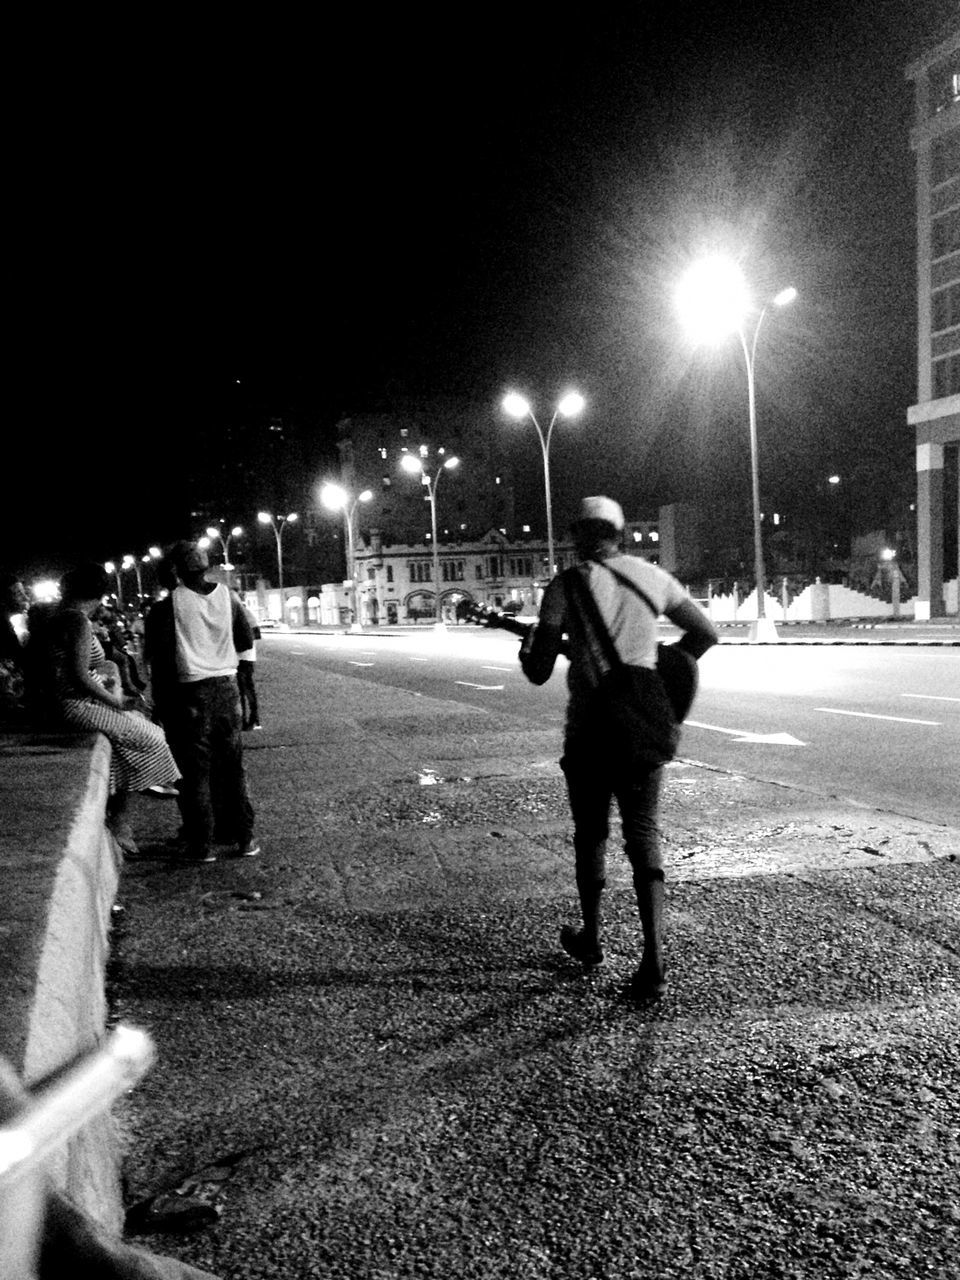 PEOPLE WALKING ON ROAD AT NIGHT